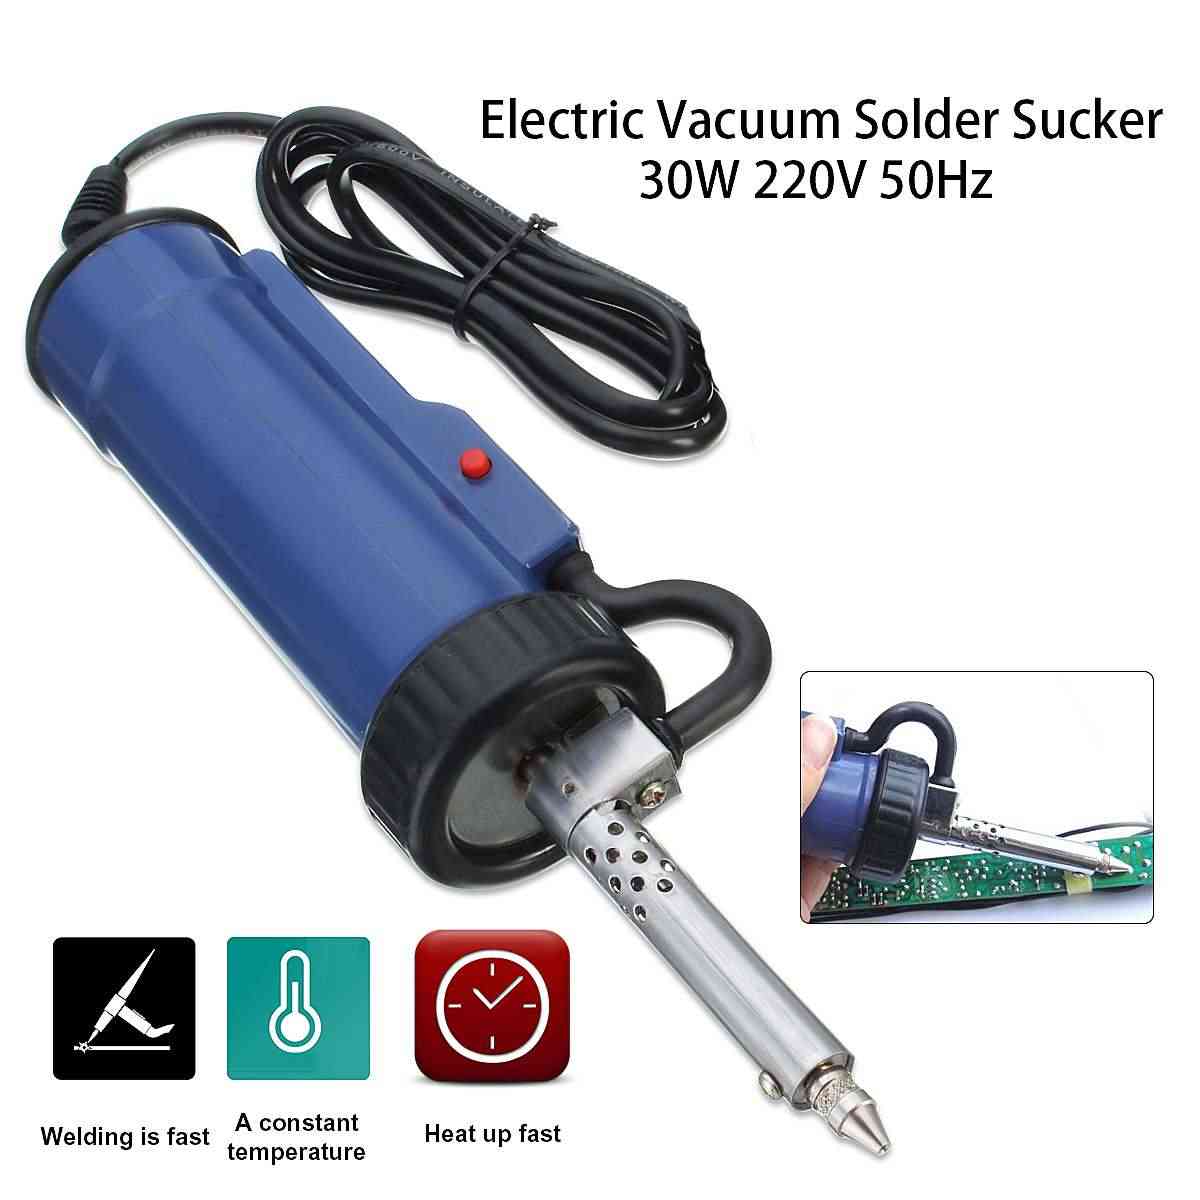 Solder Sucker 30w Electric Vacuum Desoldering Pump Iron Gun